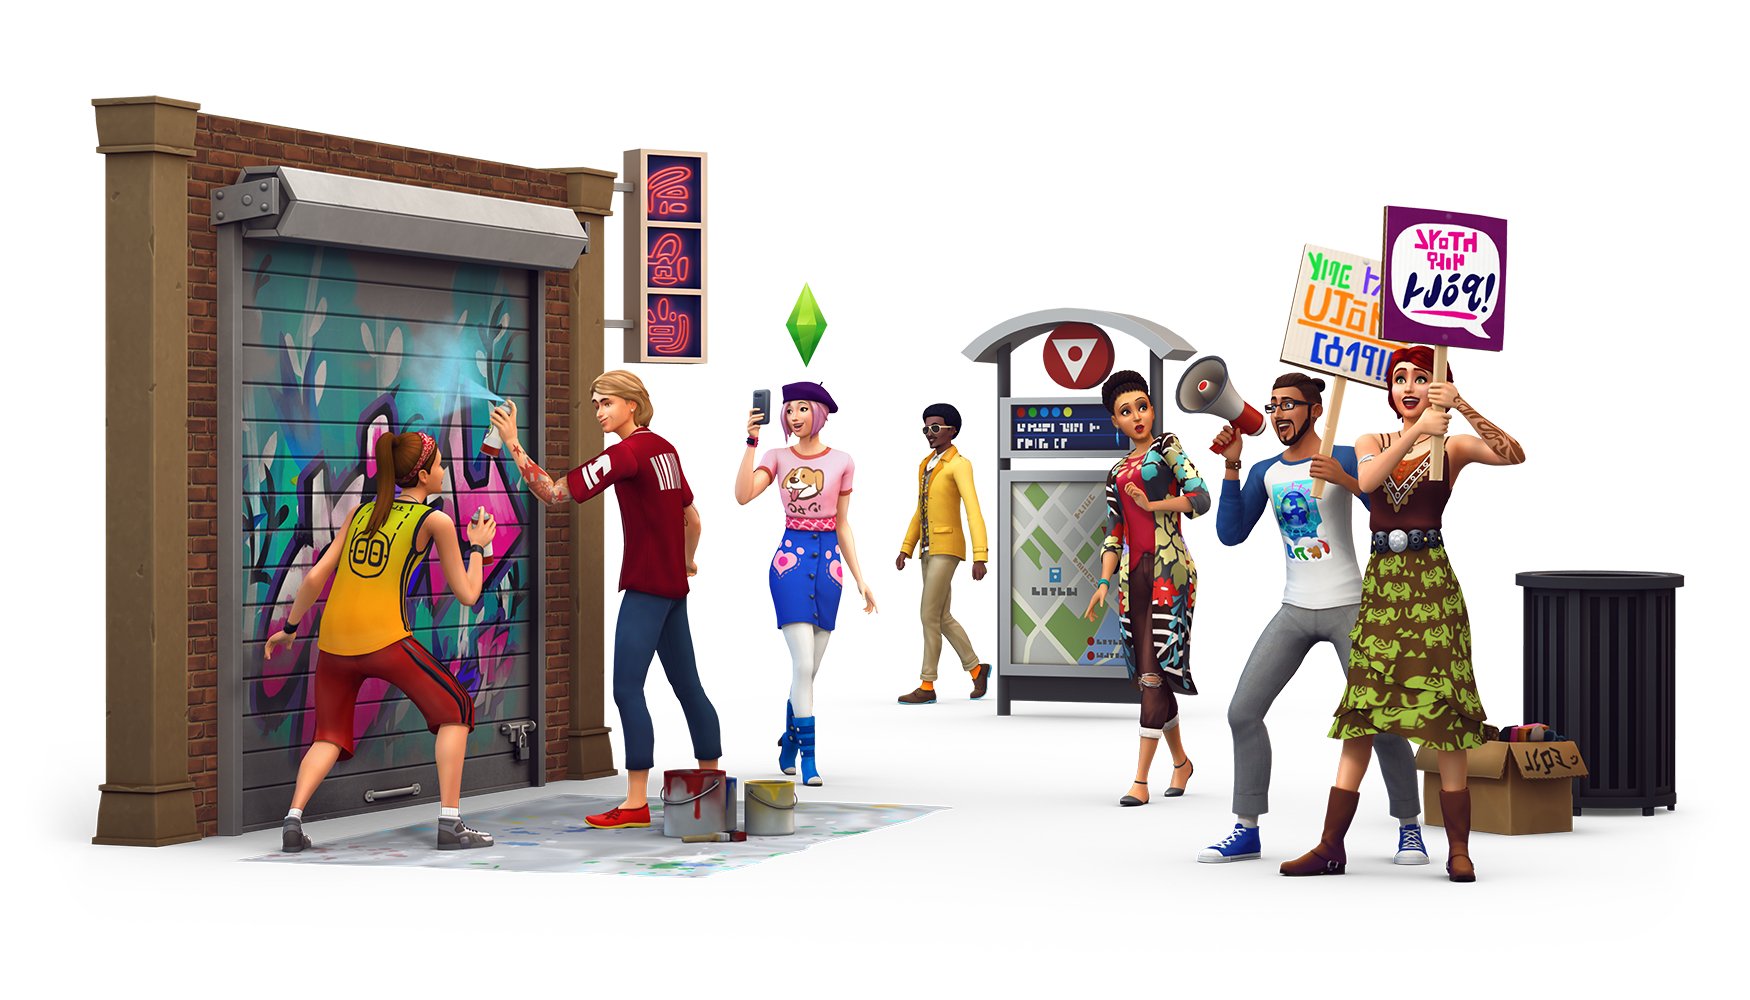 A Freaking Garage Door The Sims Forums